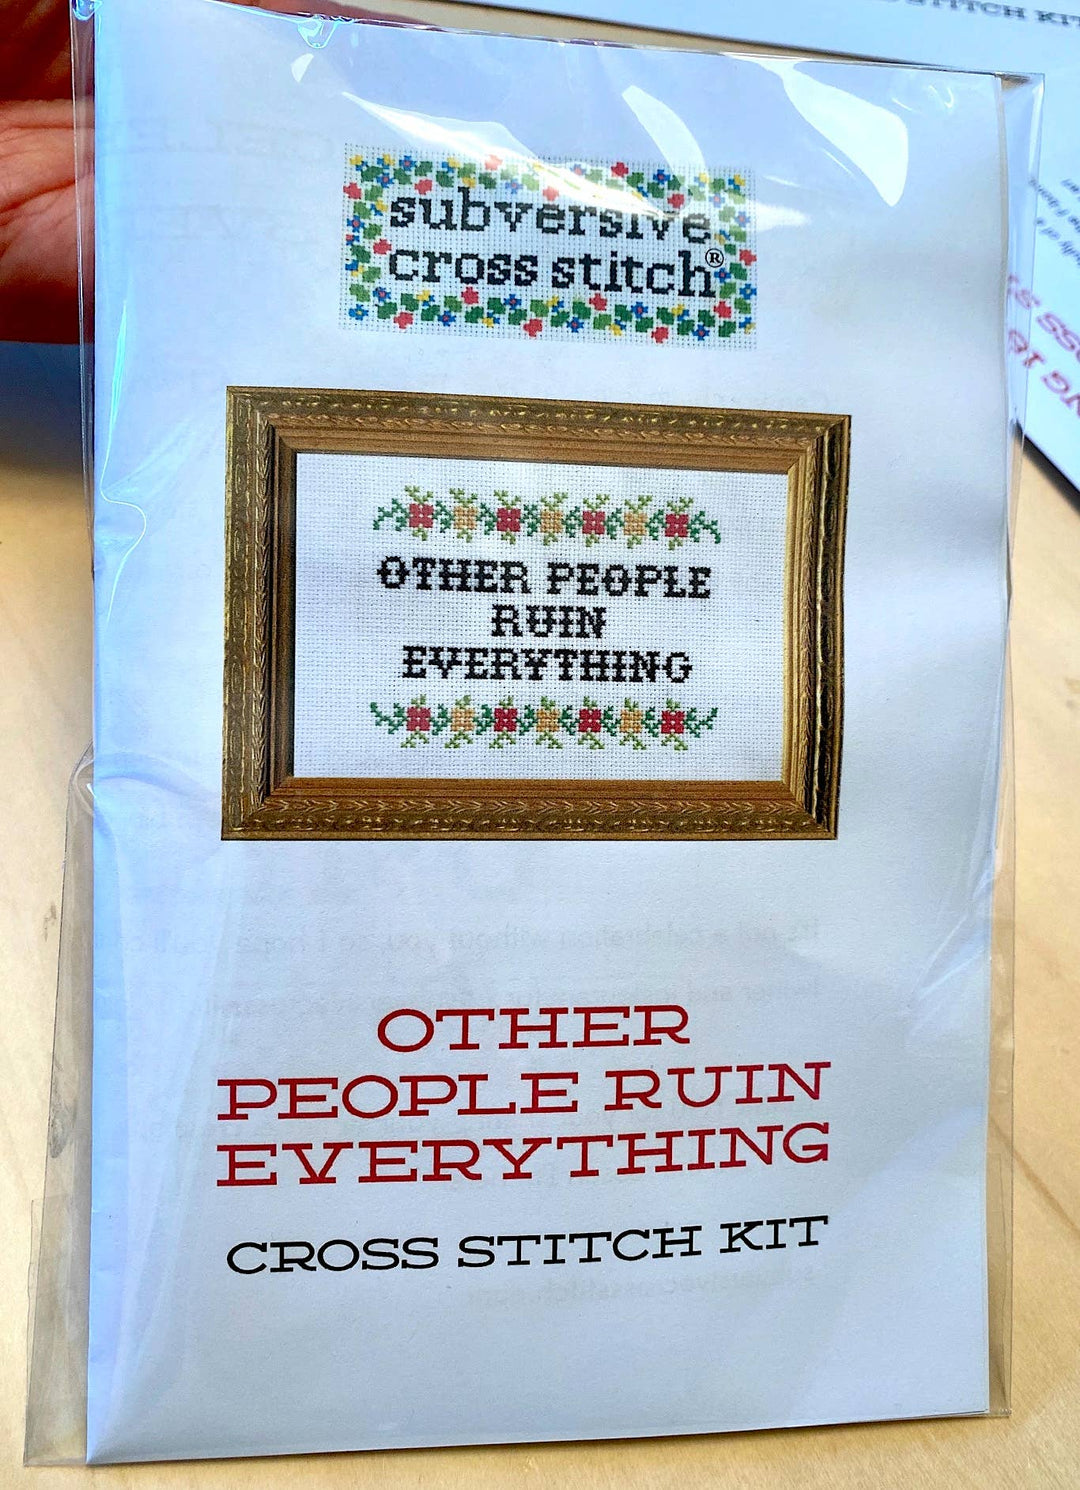 Let's Get Into Holiday Spirits Subversive Cross Stitch Kit